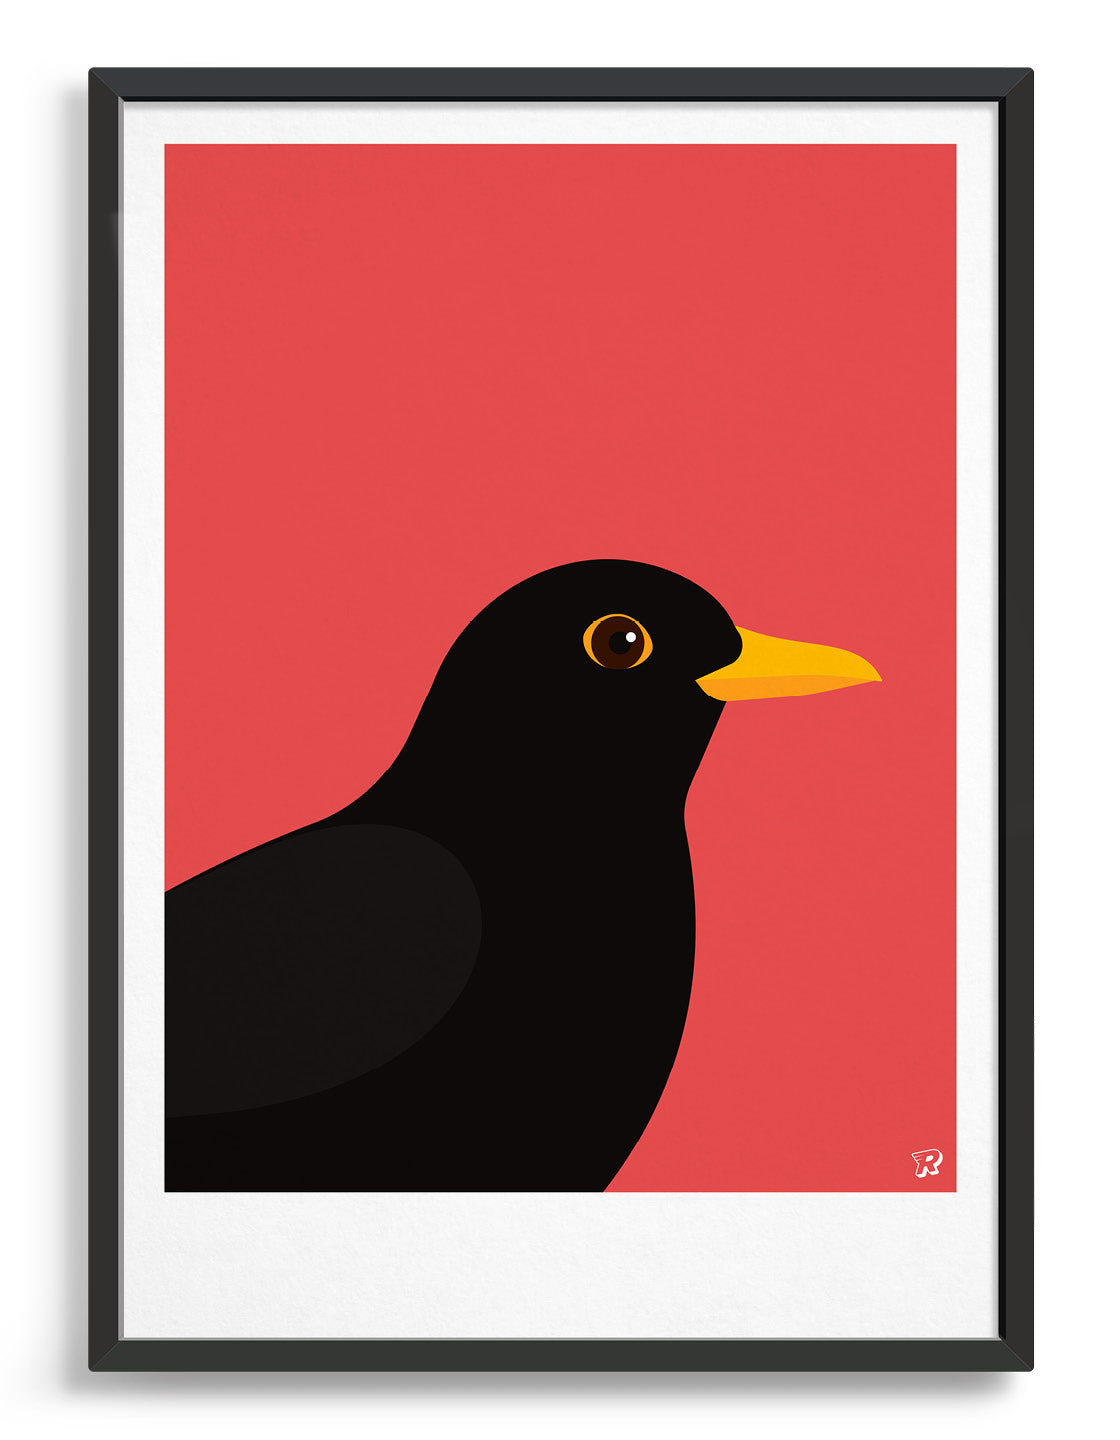 modern Blackbird illustration against a red background